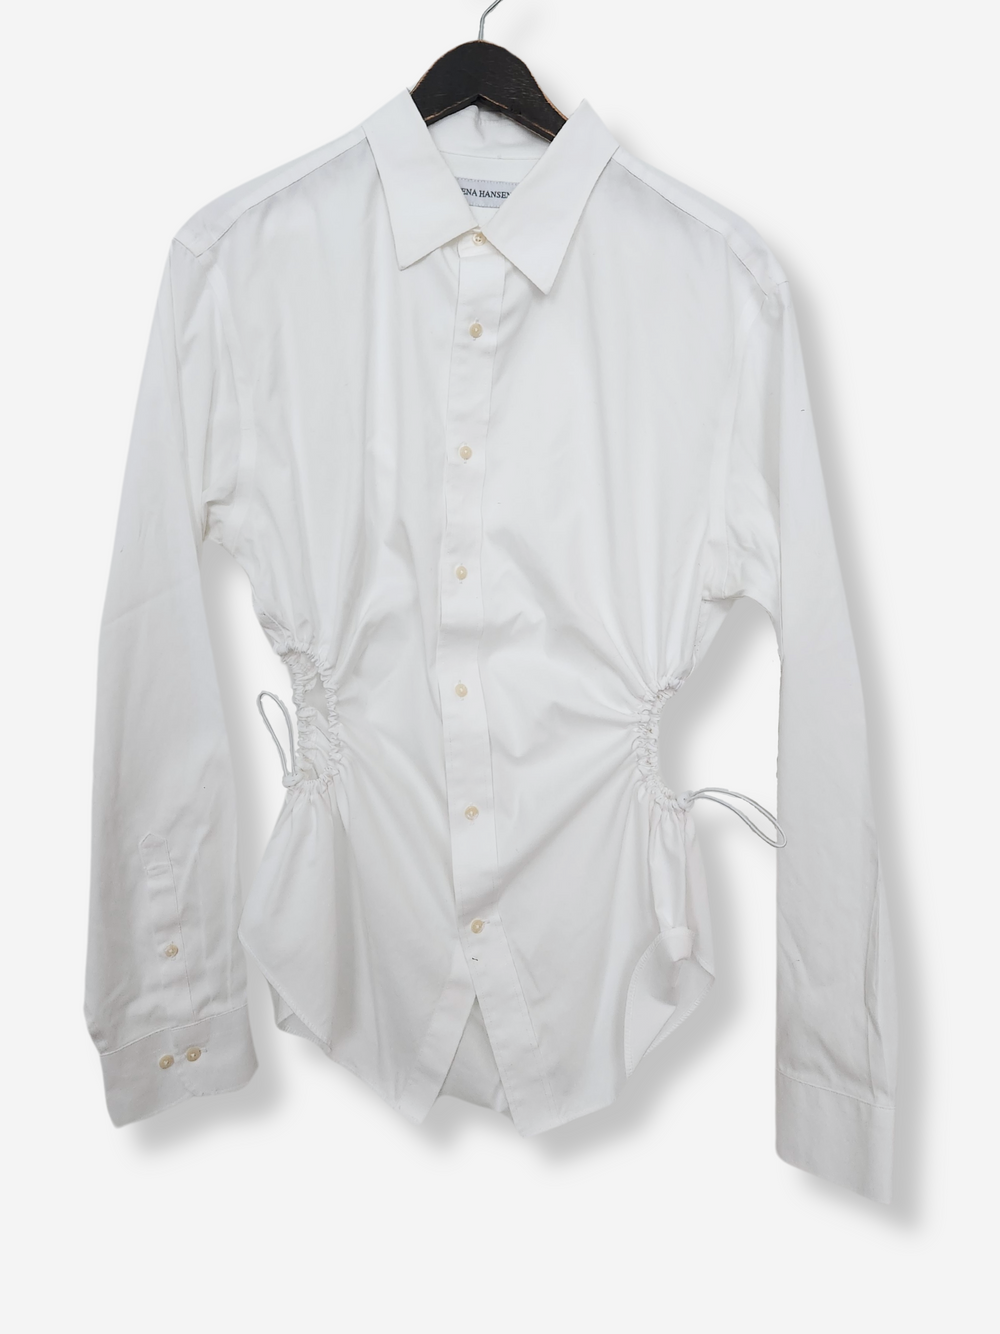 Bungee Shirt White L